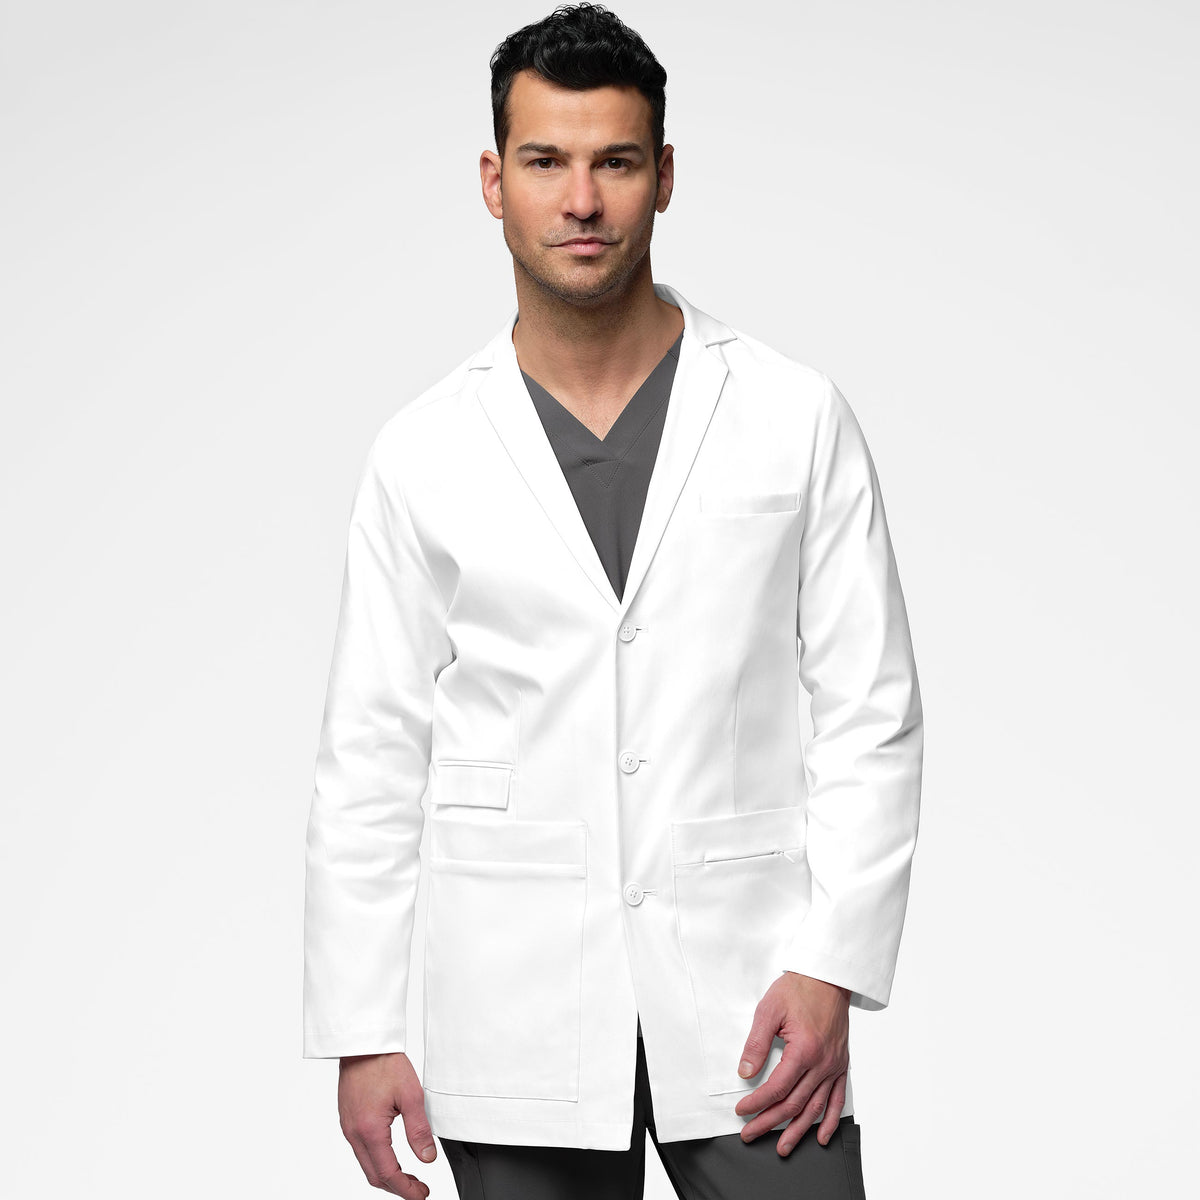 Slate Men's 34 Inch Doctors Coat - White Coat